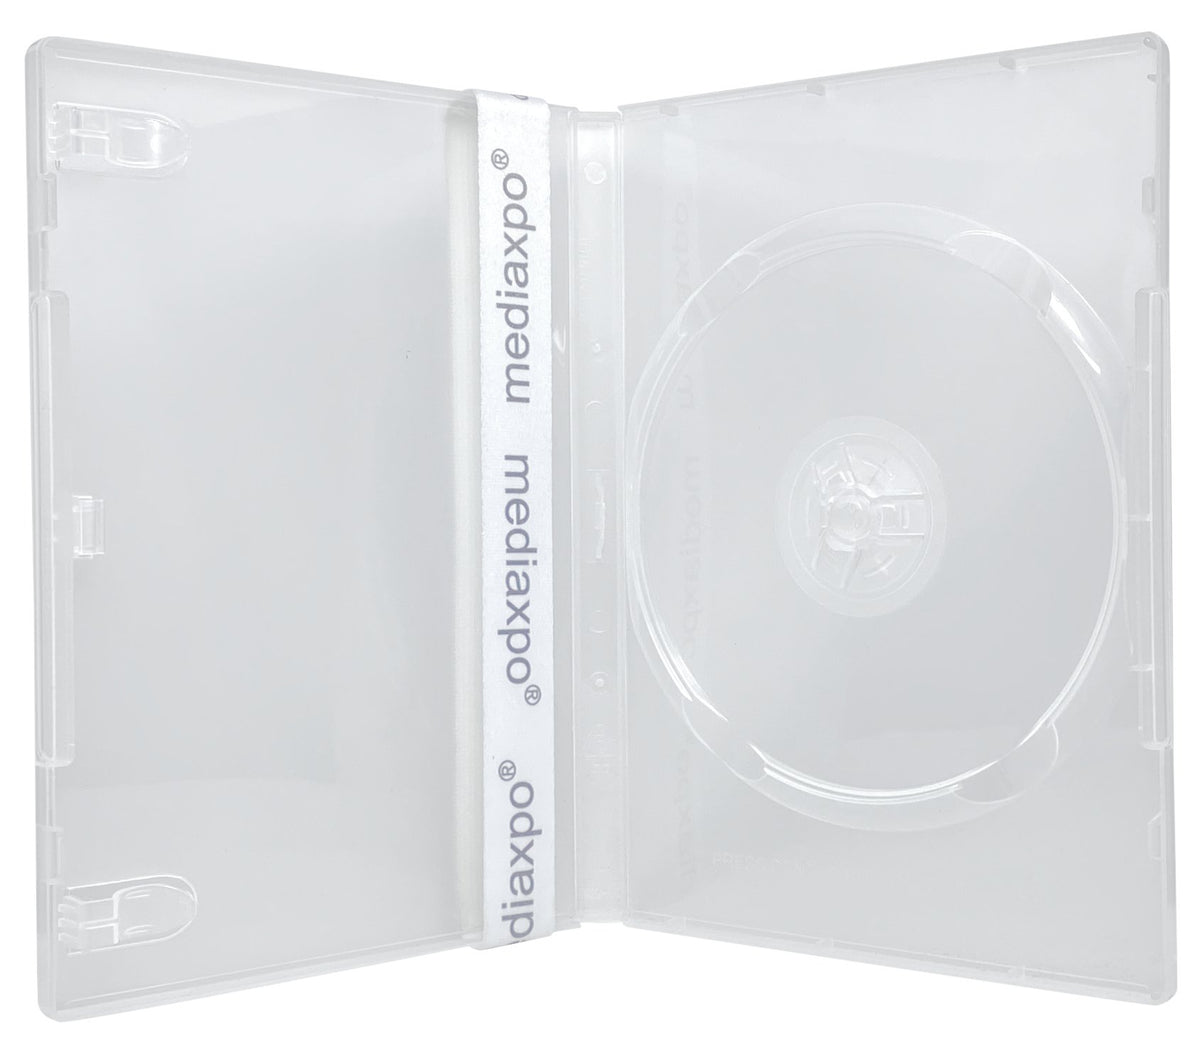 PREMIUM STANDARD Single DVD Cases 14MM (100% New Material), CheckOutStore.com